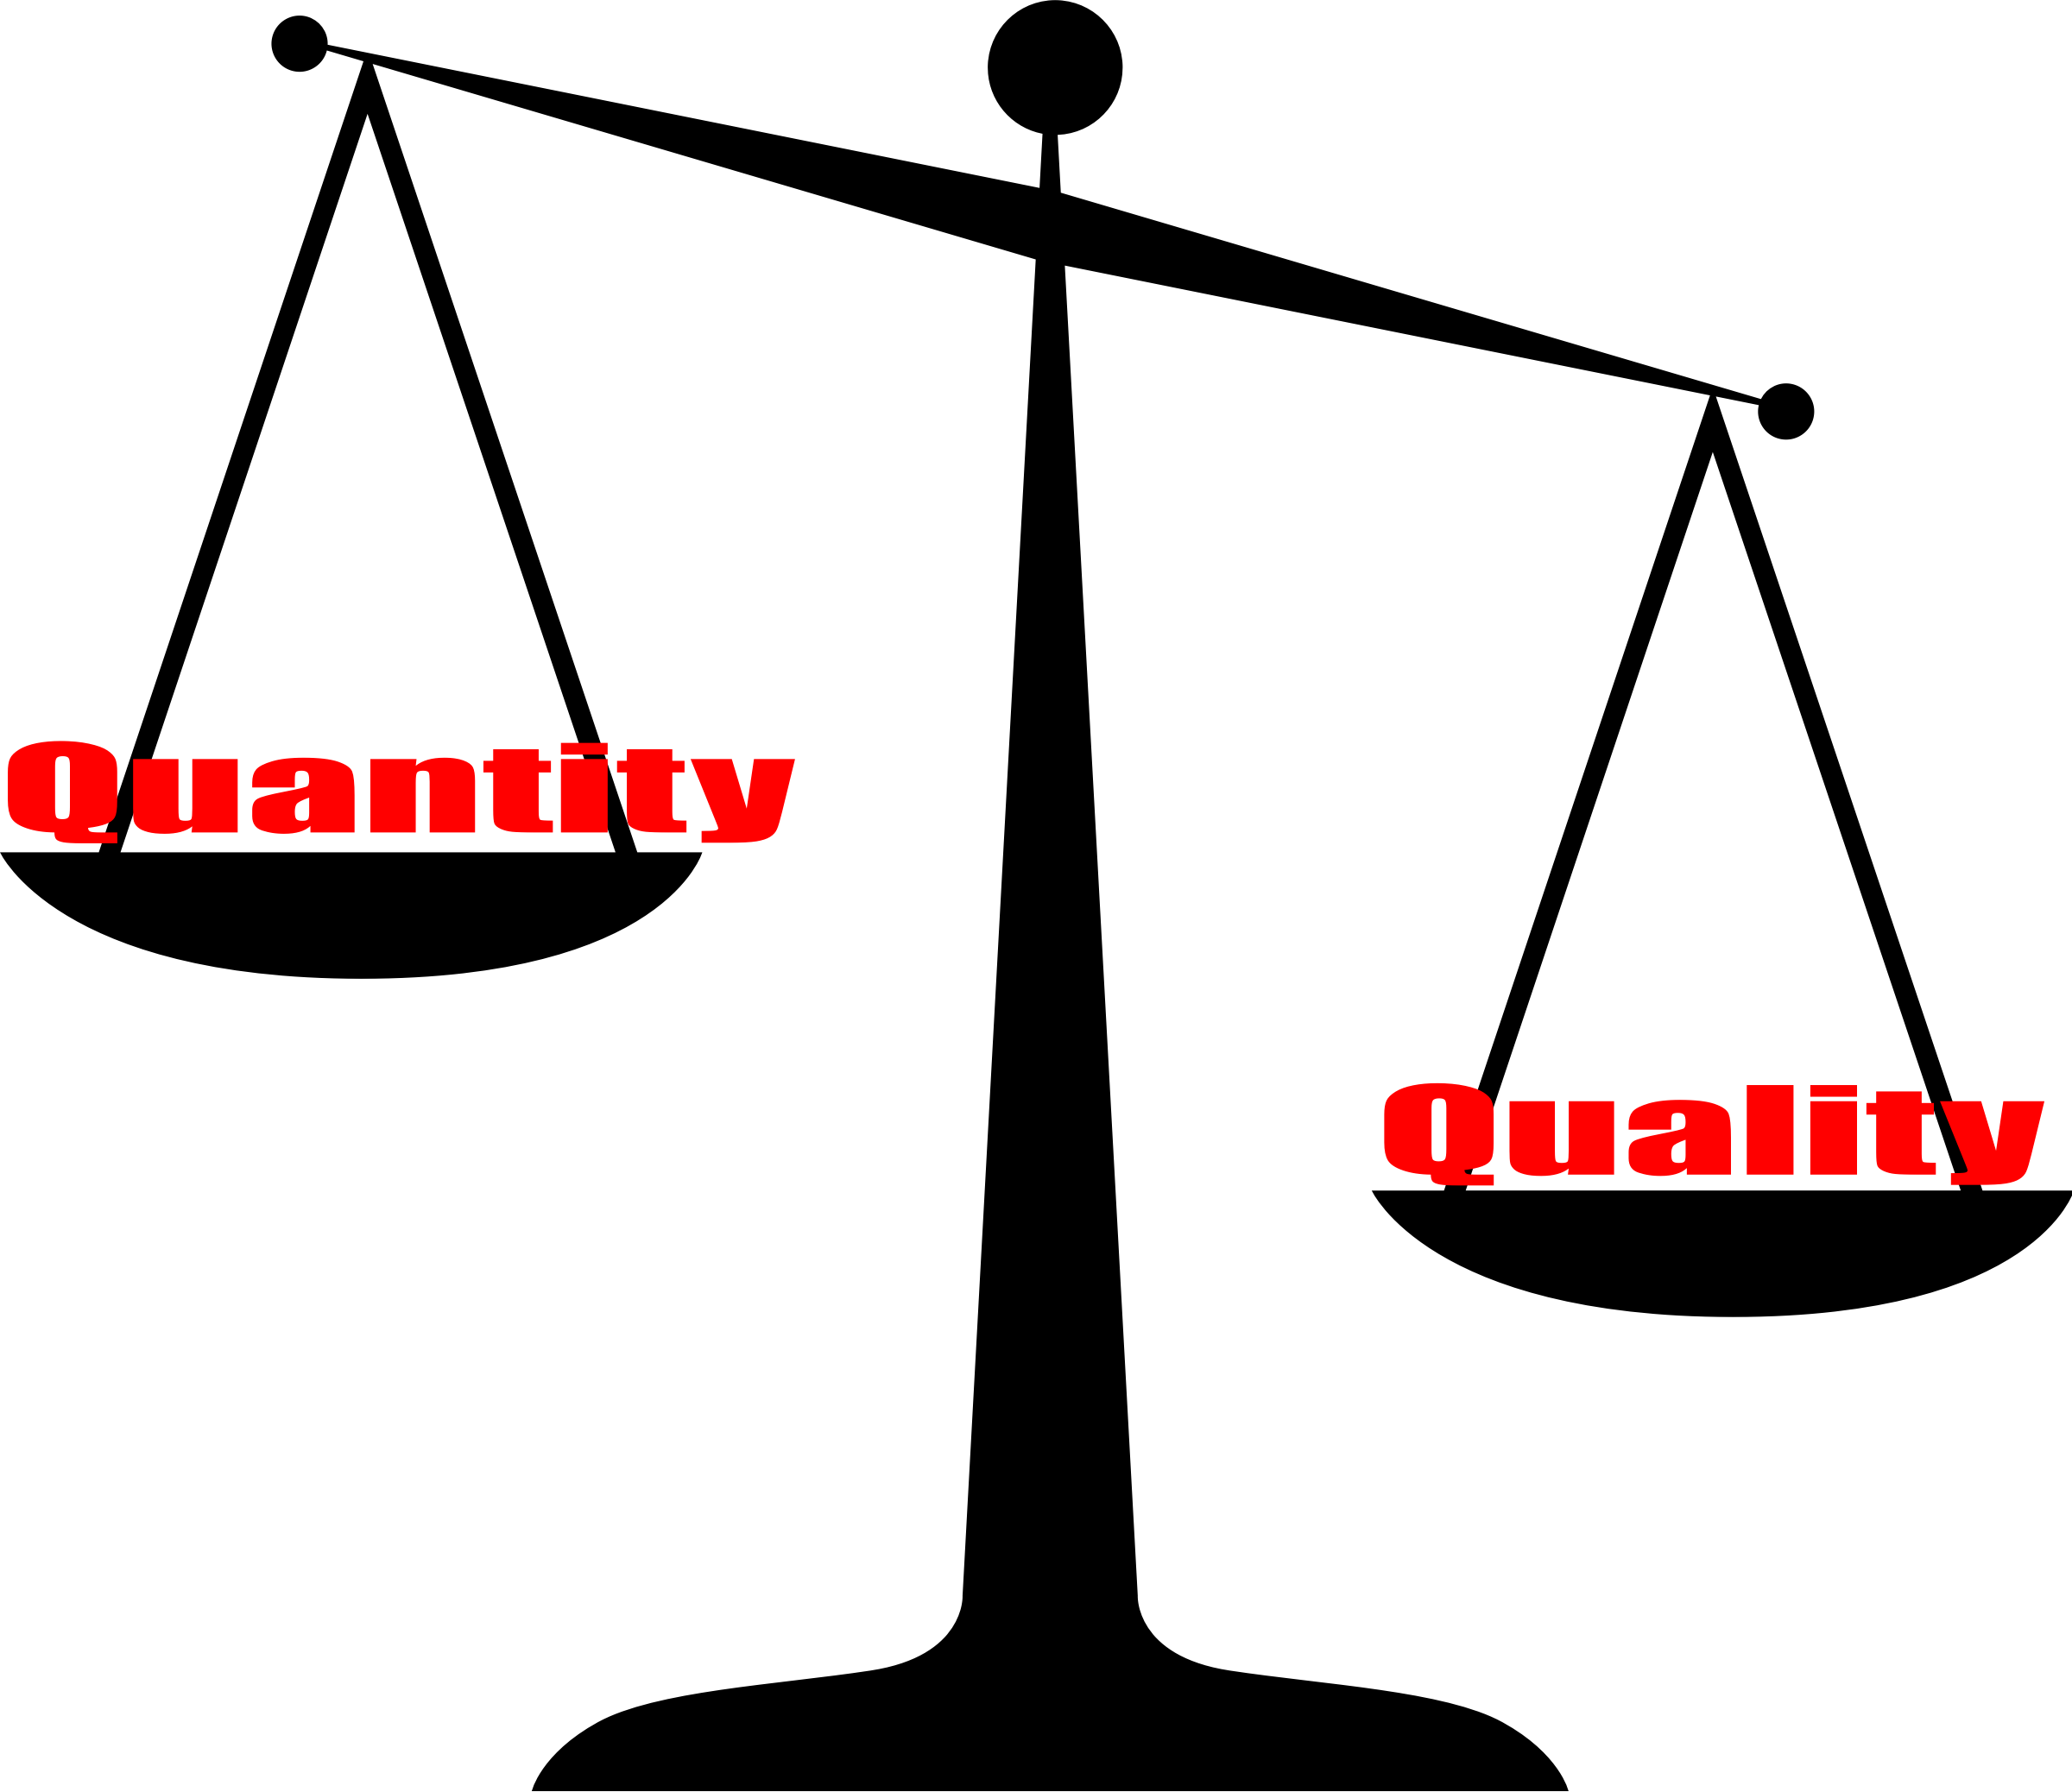 Quality vs Quantity Vector Clipart image - Free stock photo - Public